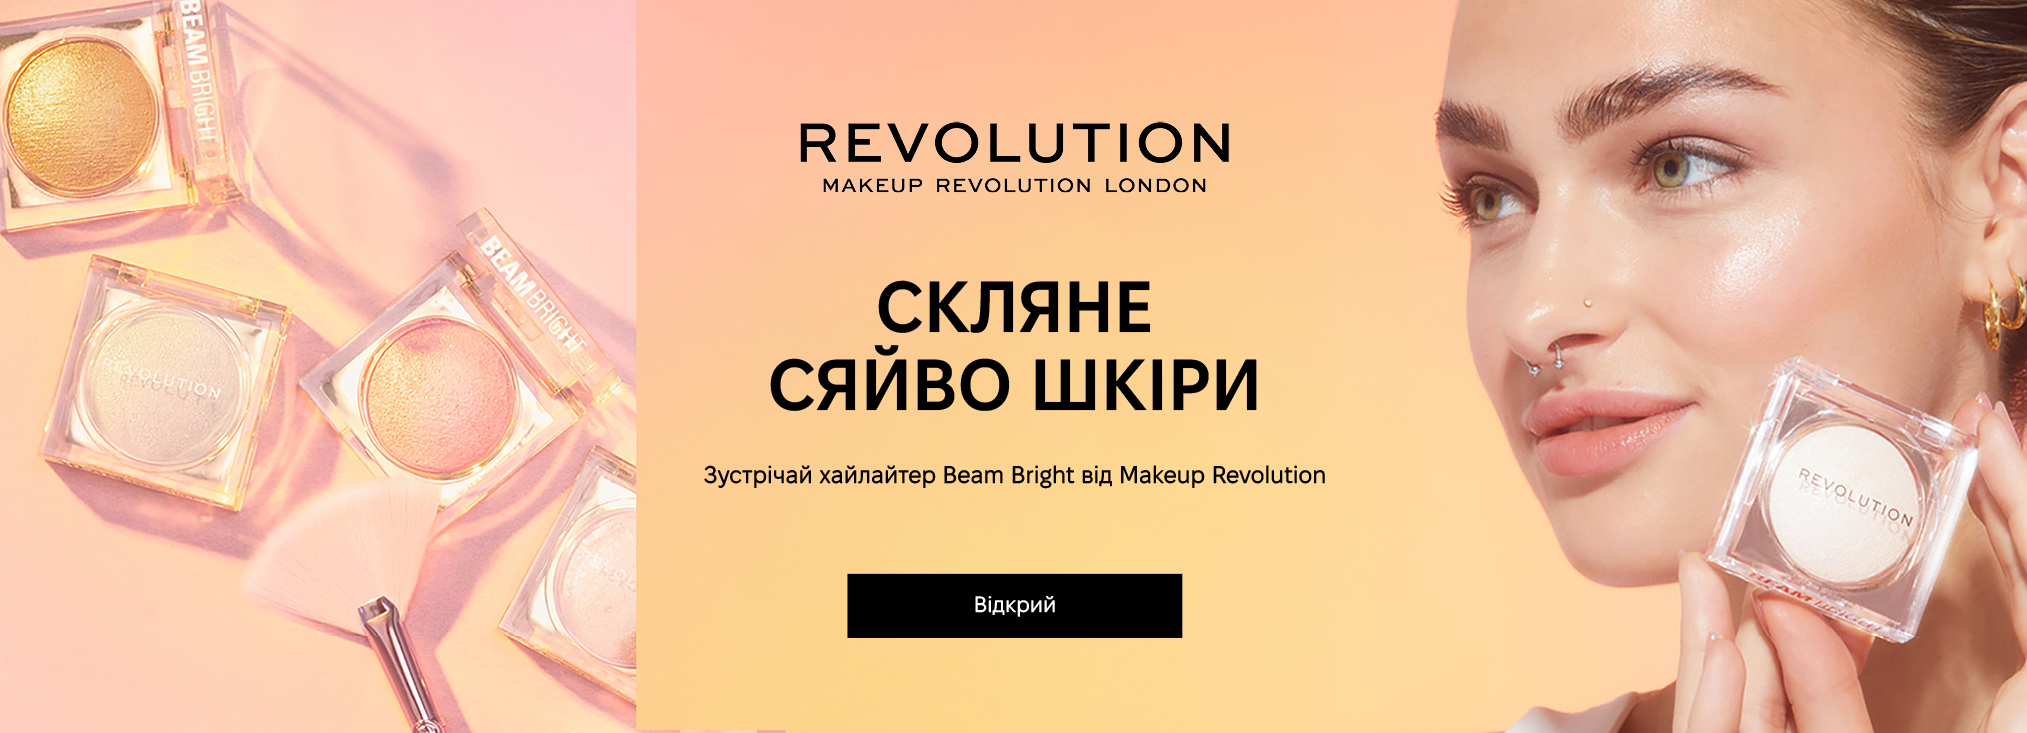 Makeup Revolution_2419